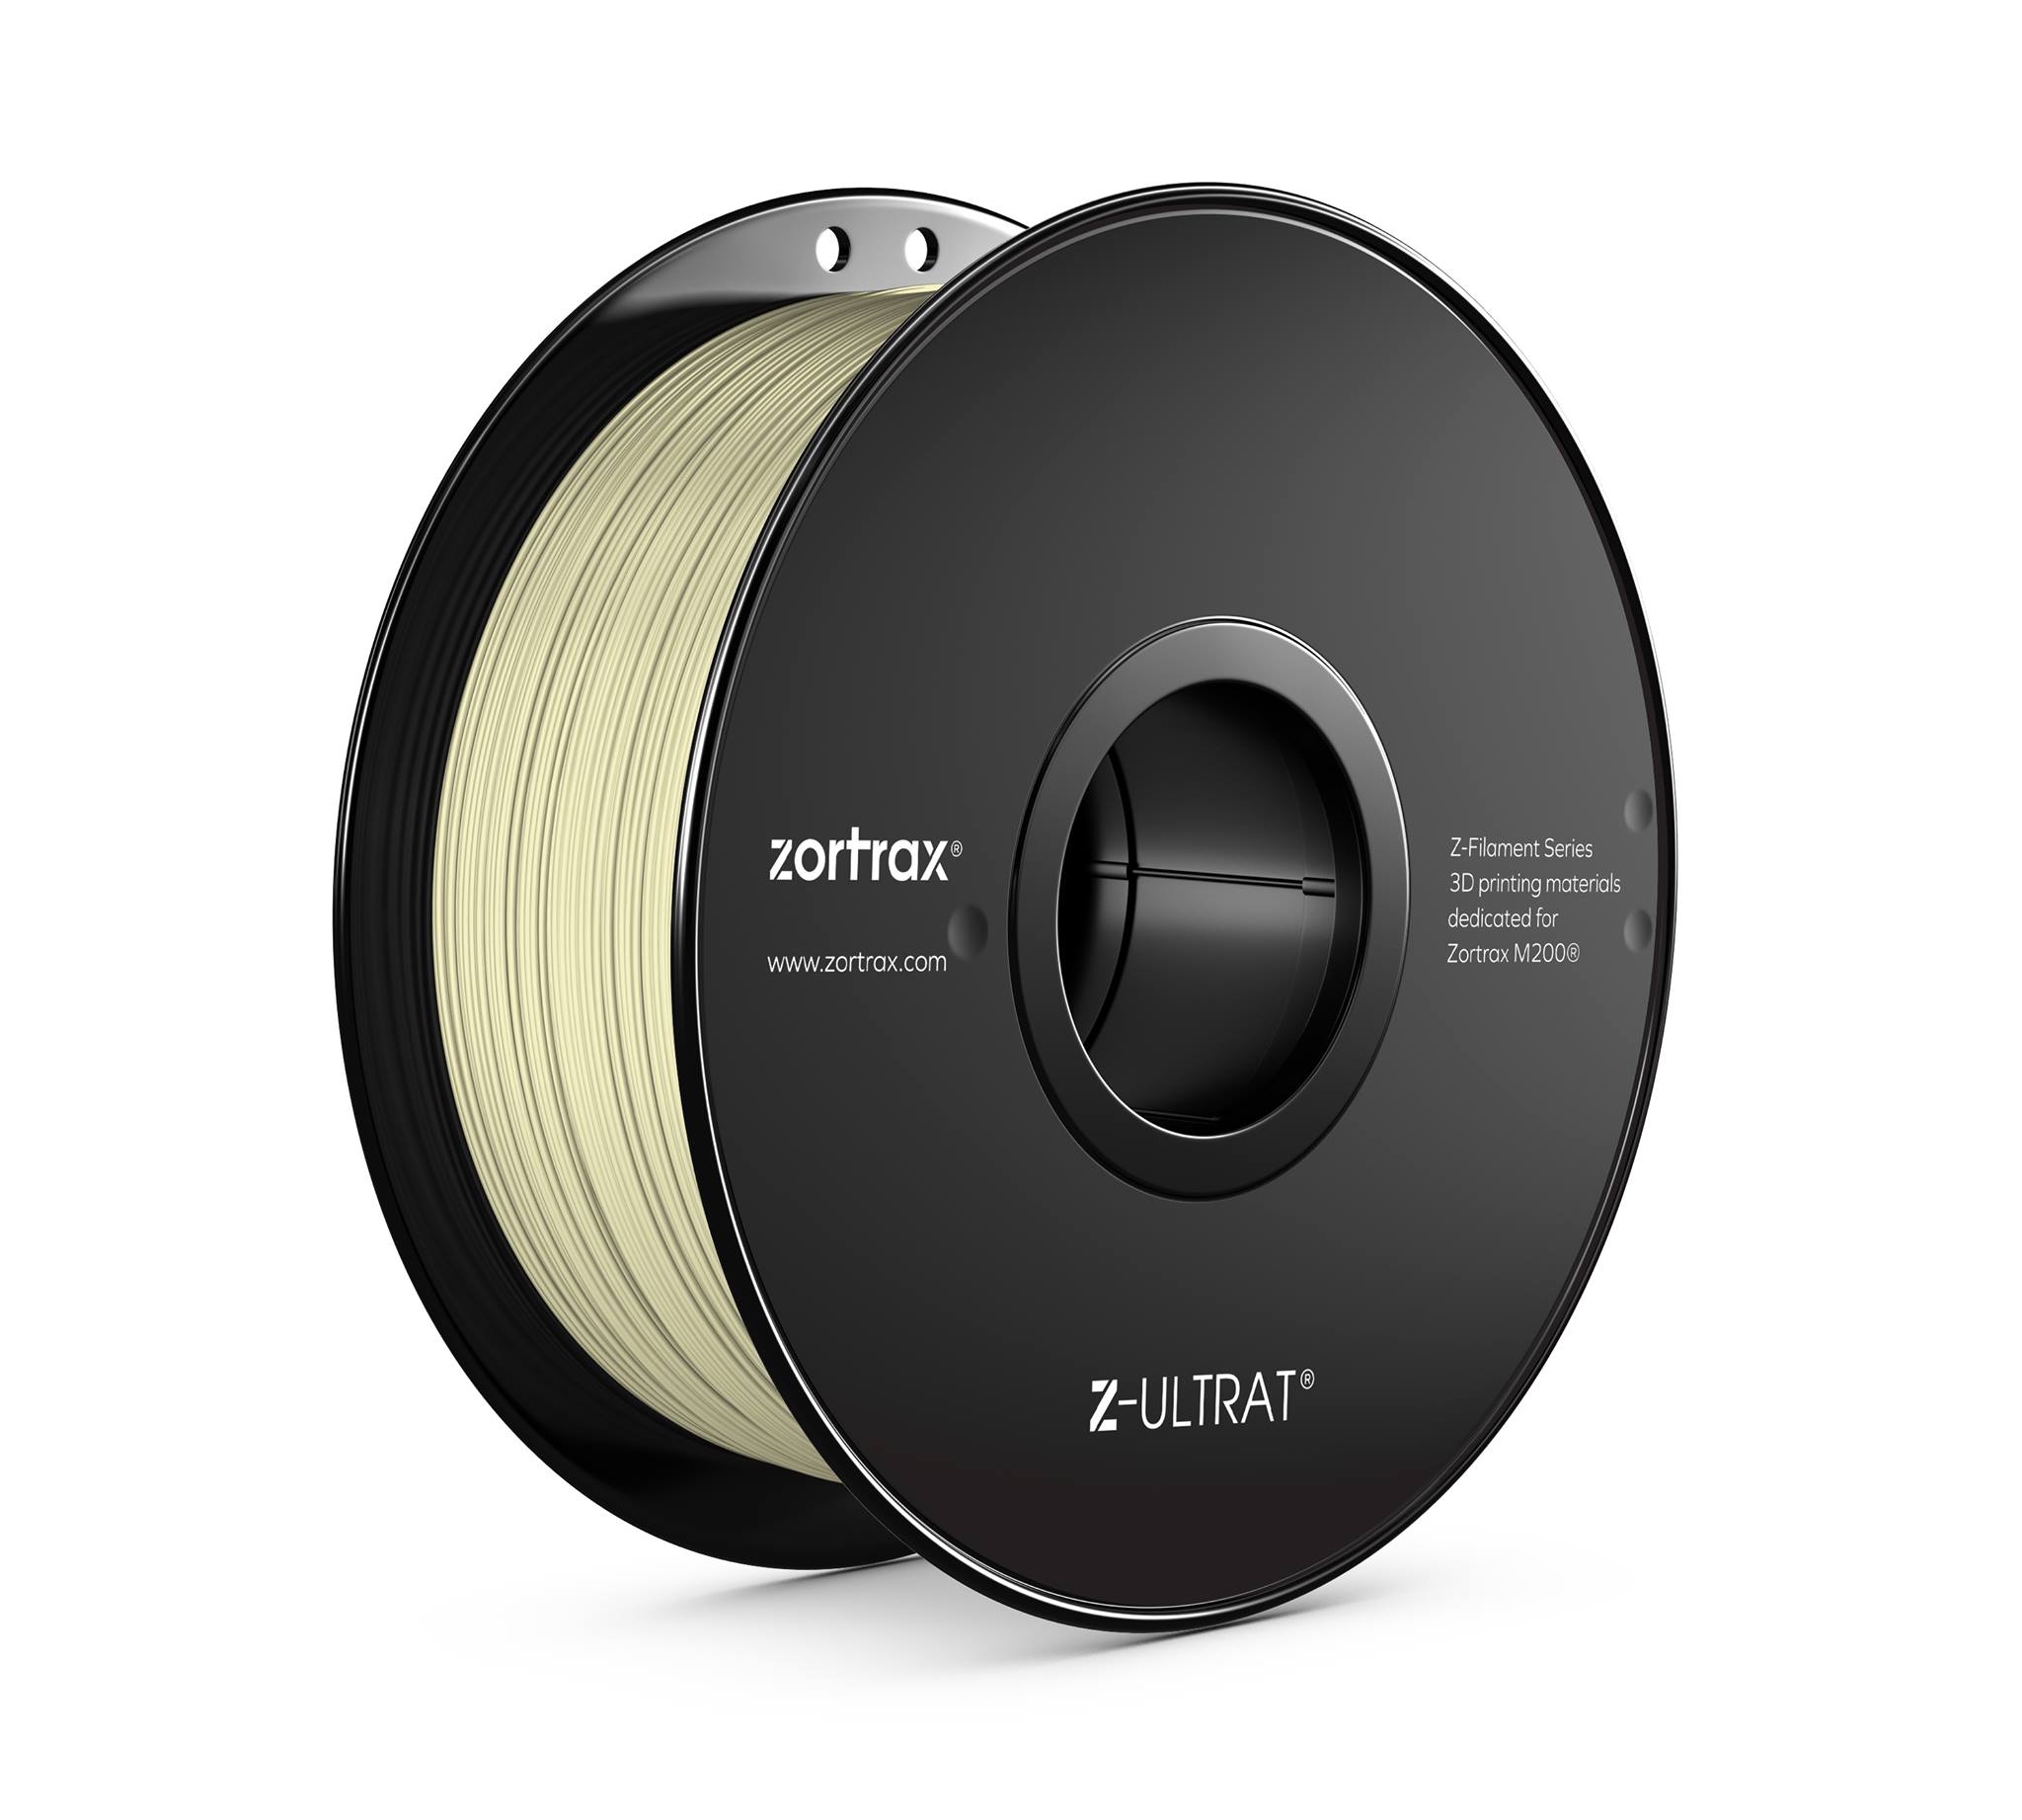 Zortrax Z-Ultrat Ivory 800 gms for Inventur/M200/M200 Plus